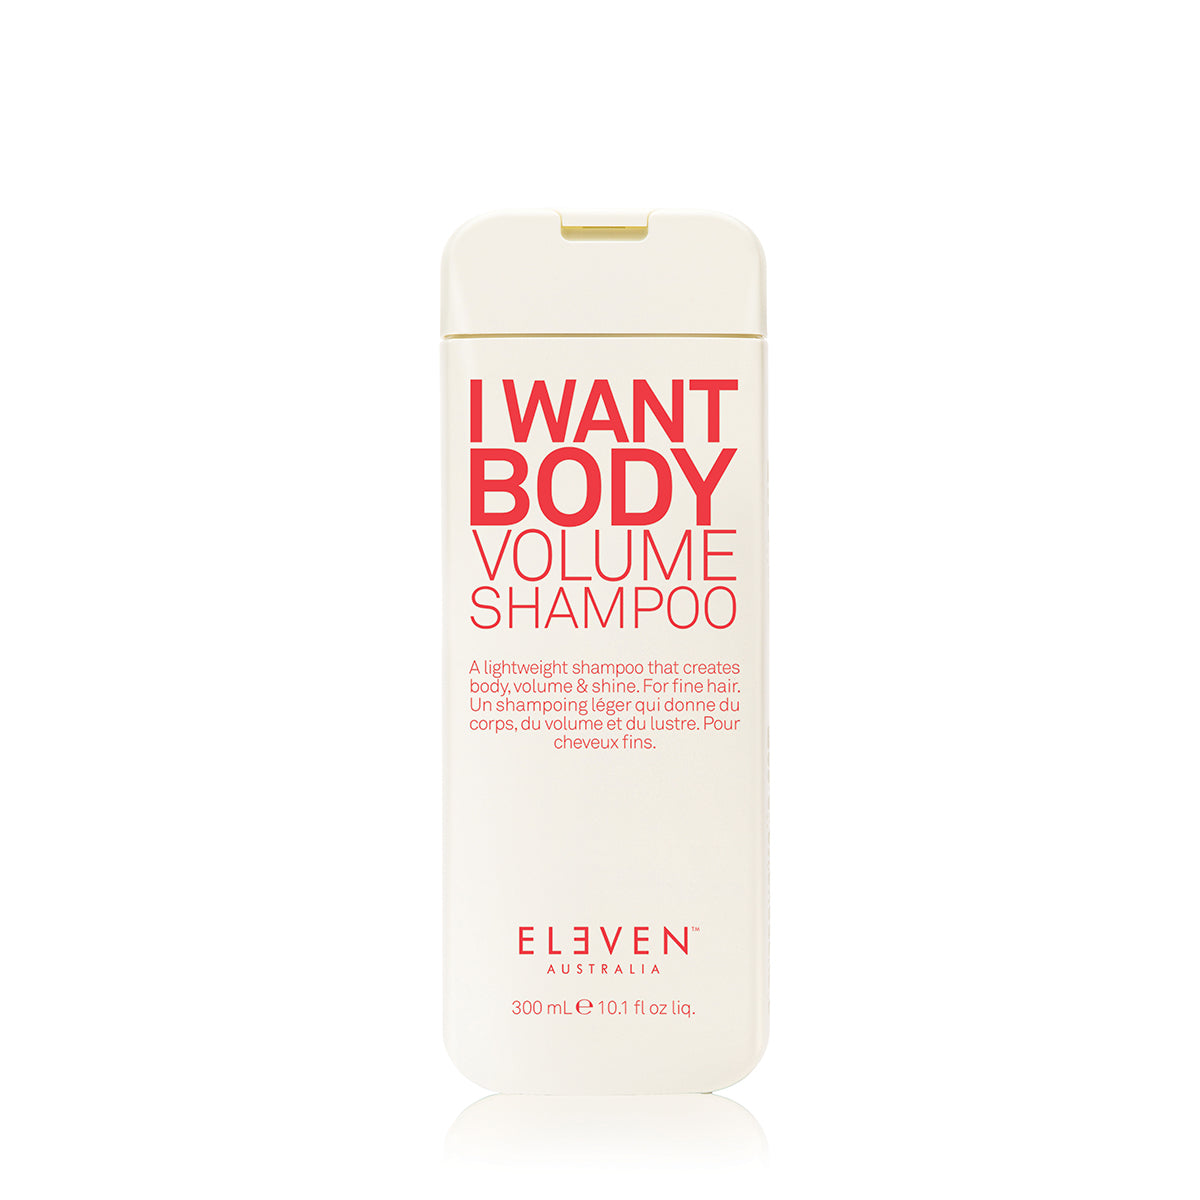 Eleven I want body volume shampoo